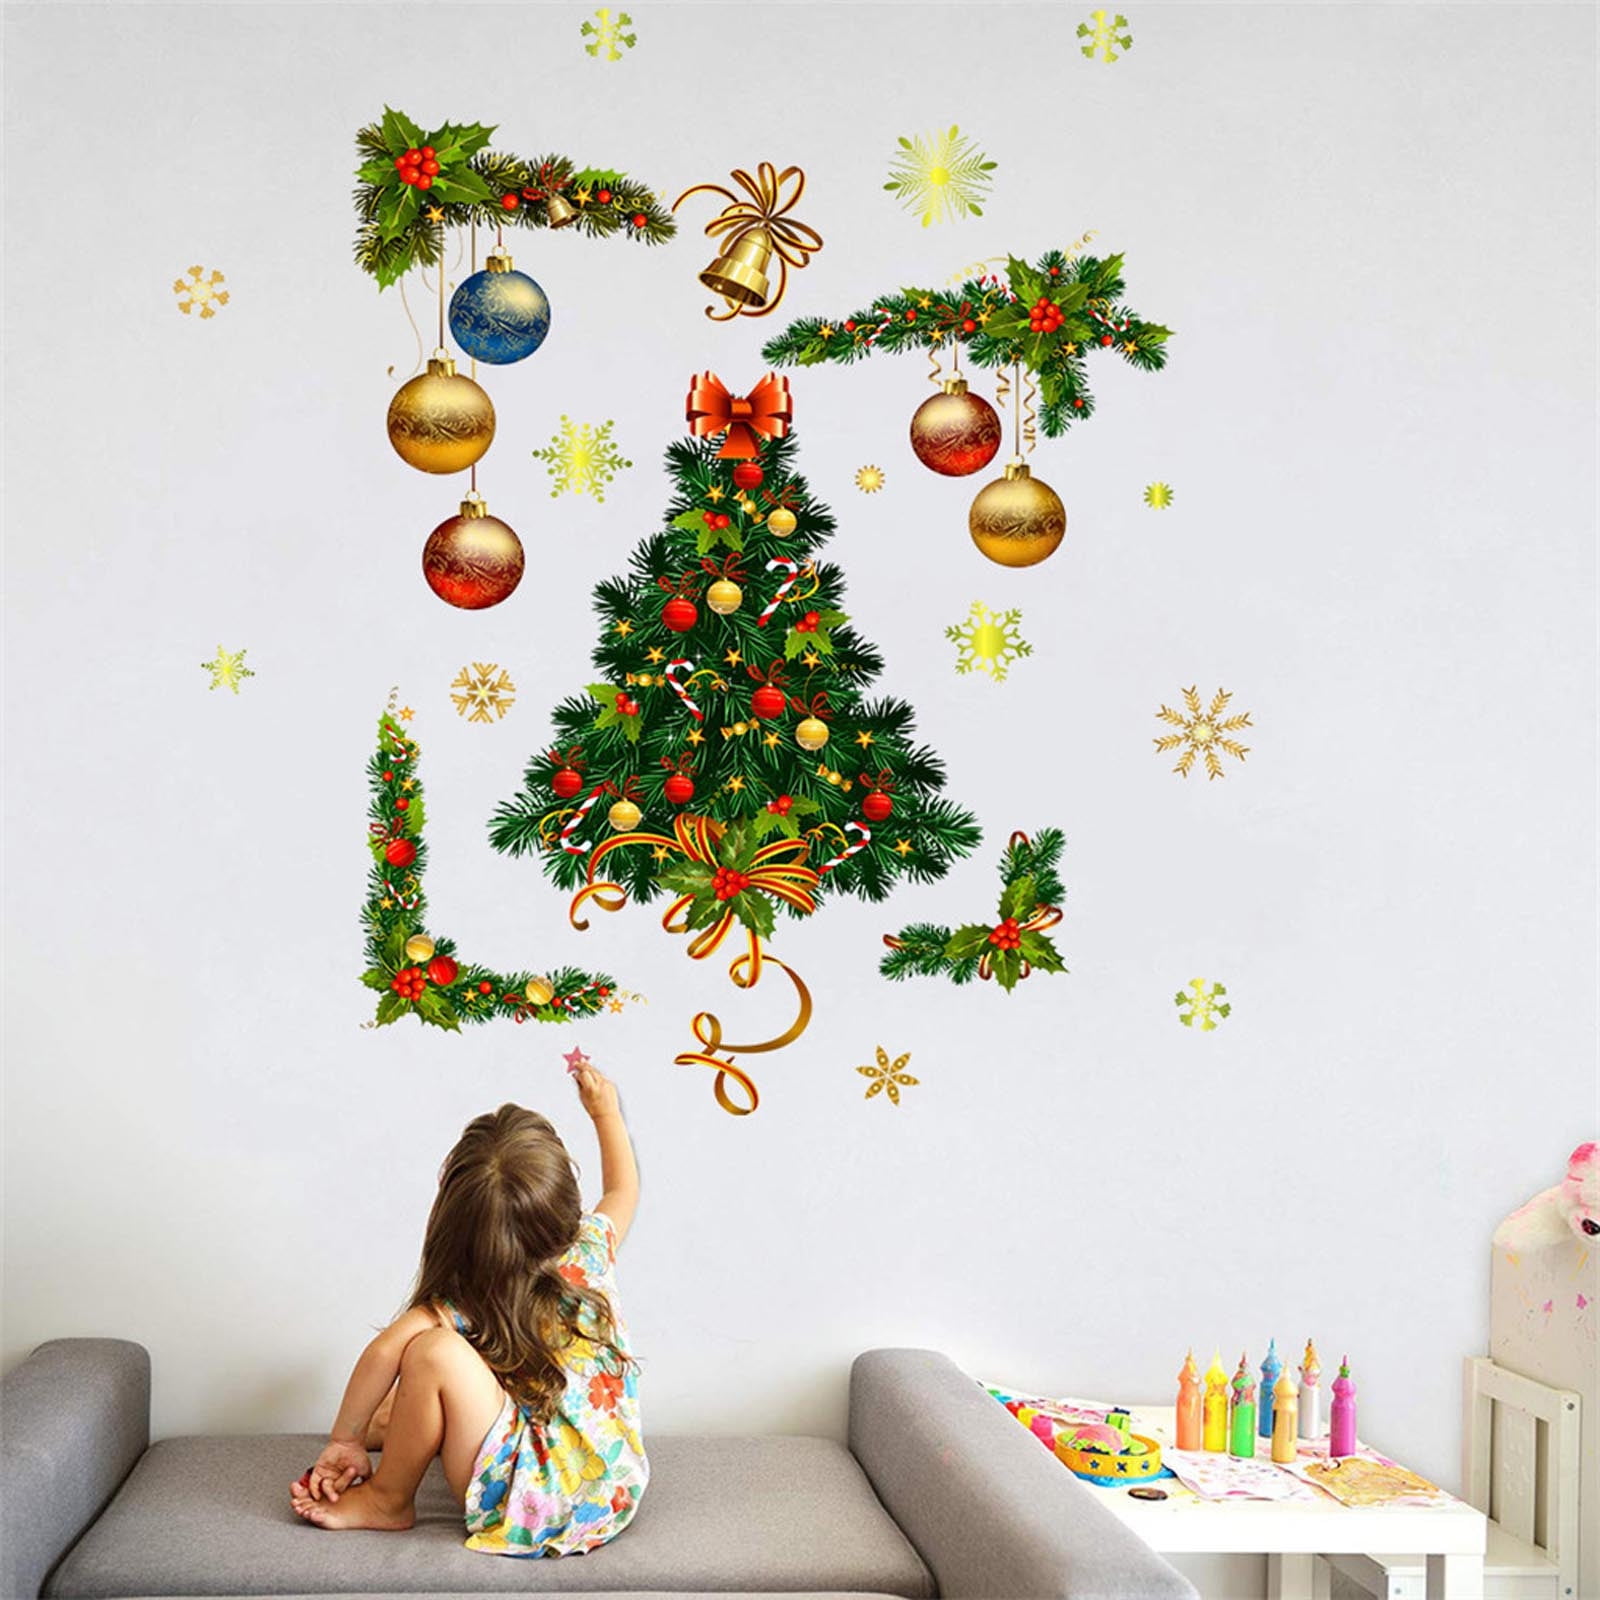 Merry Christmas Window Wall Sticker Decals Santa Claus Snowflake Home Xmas Decor